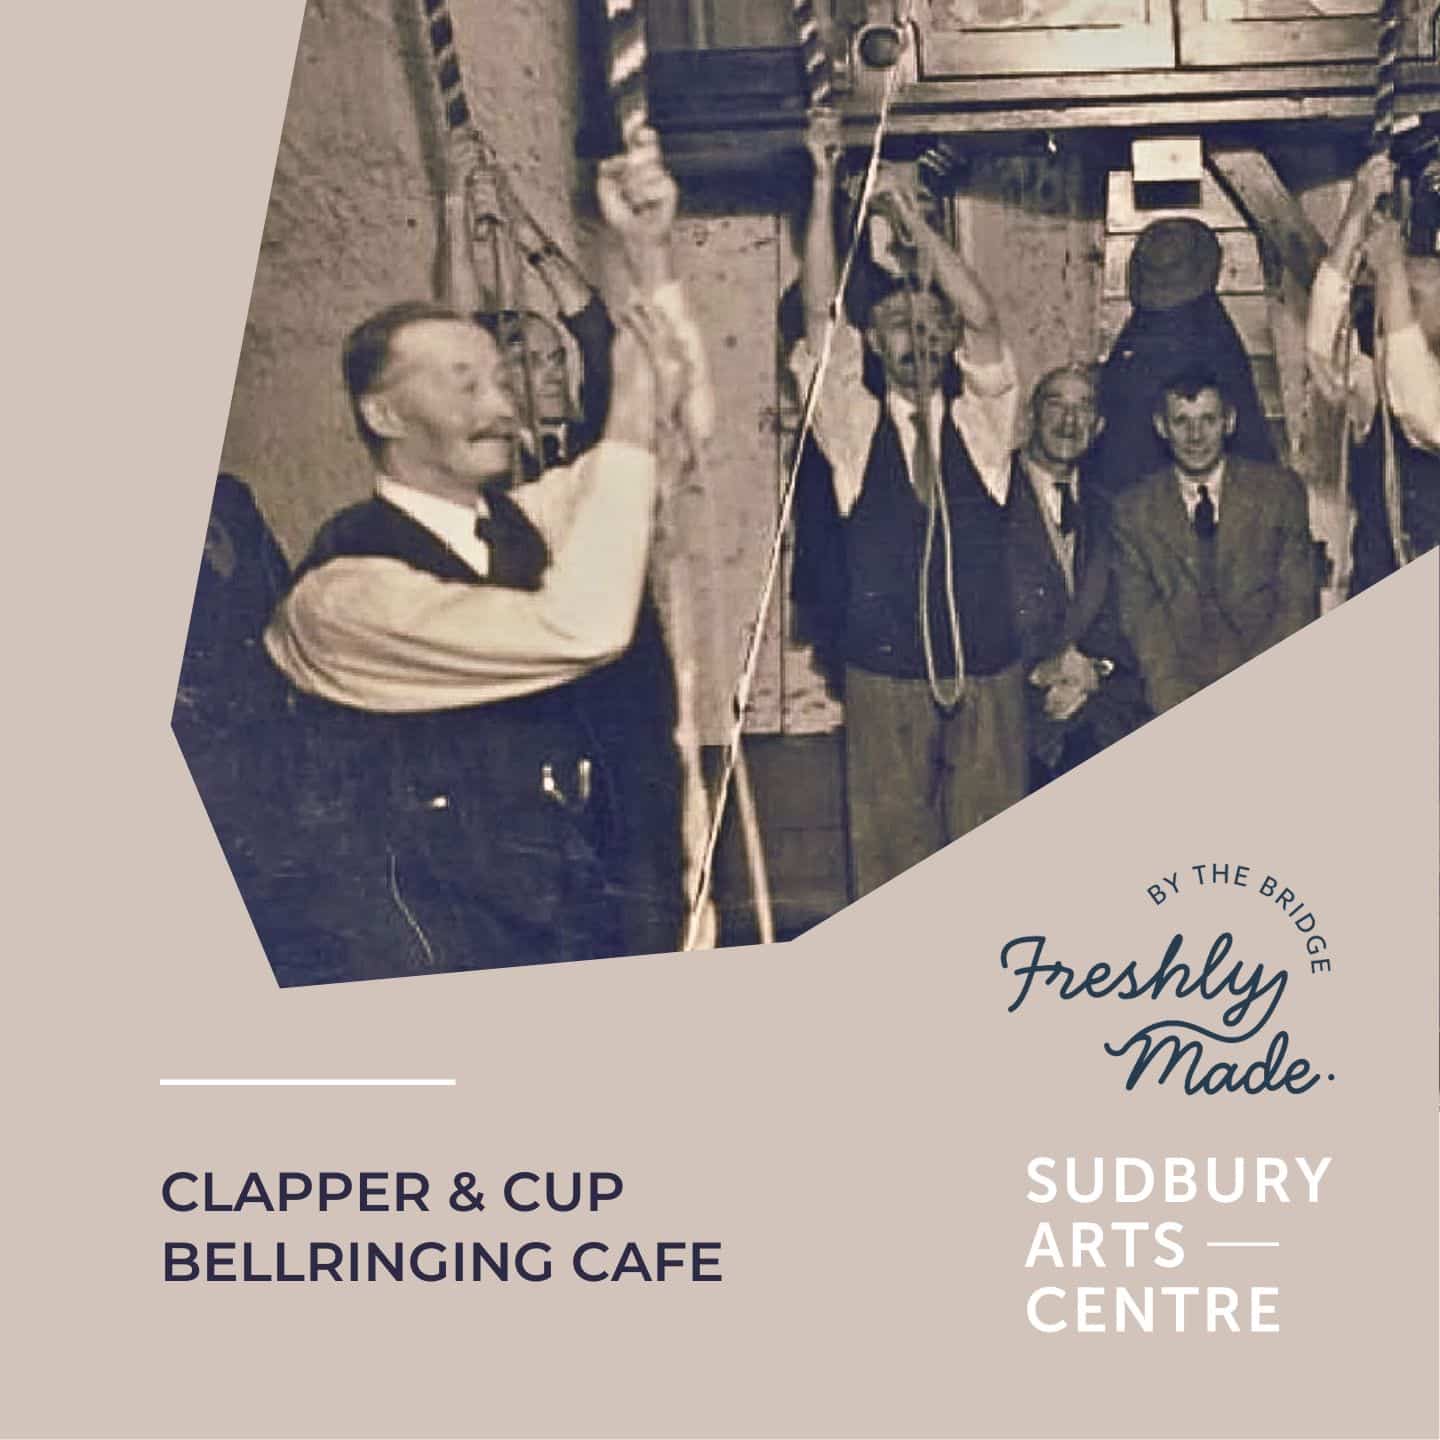 Clapper & Cup Bellringing Cafe